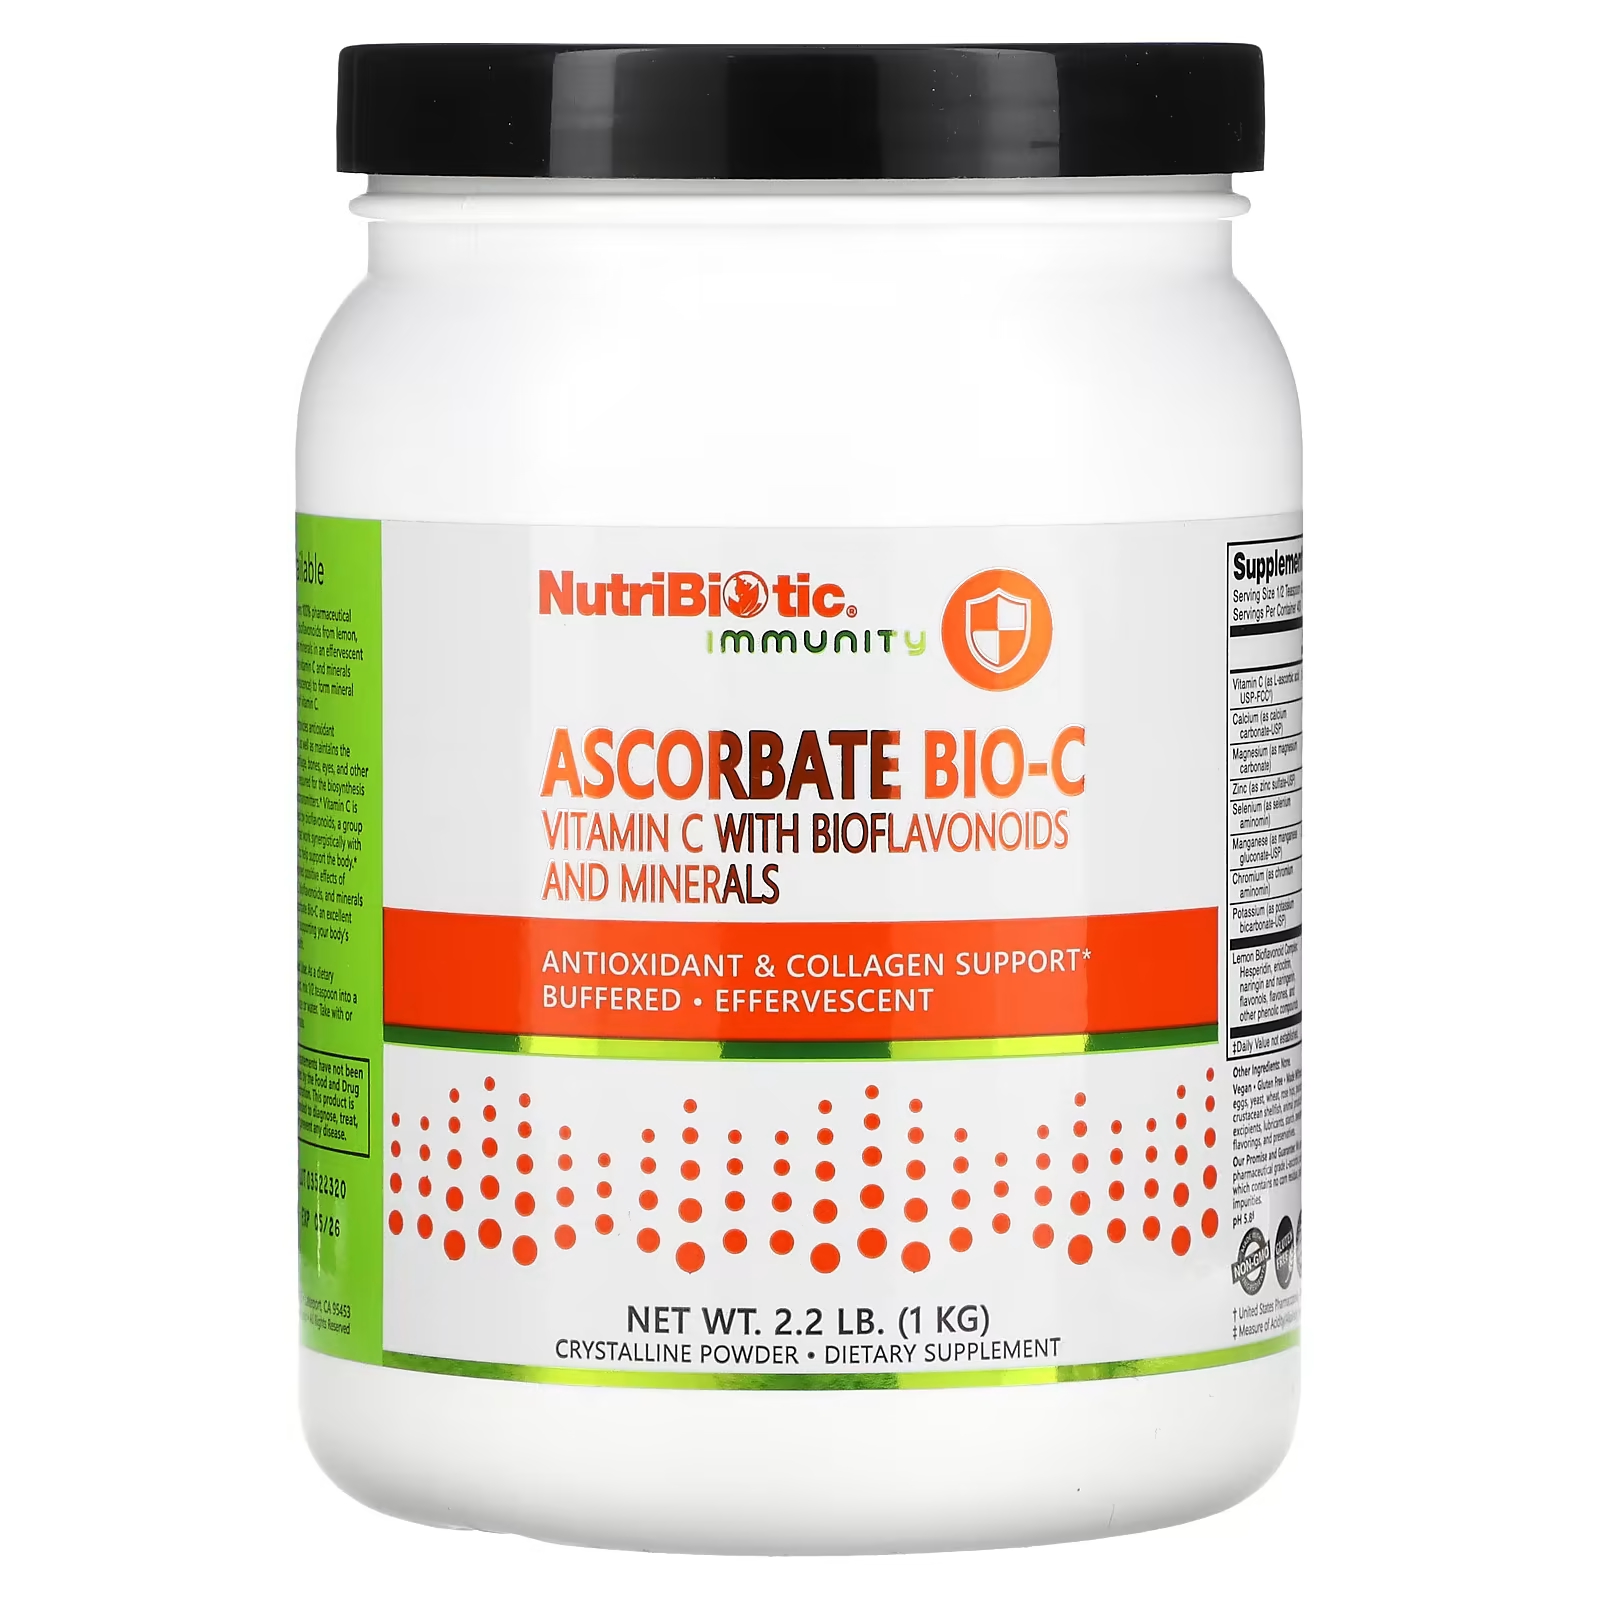 NutriBiotic Immunity Ascorbate Bio-C Витамин C с биофлавоноидами и минералами 2,2 фунта (1 кг) nutribiotic immunity аскорбат bio c витамин c с биофлавоноидами и минералами 1 кг 2 2 фунта